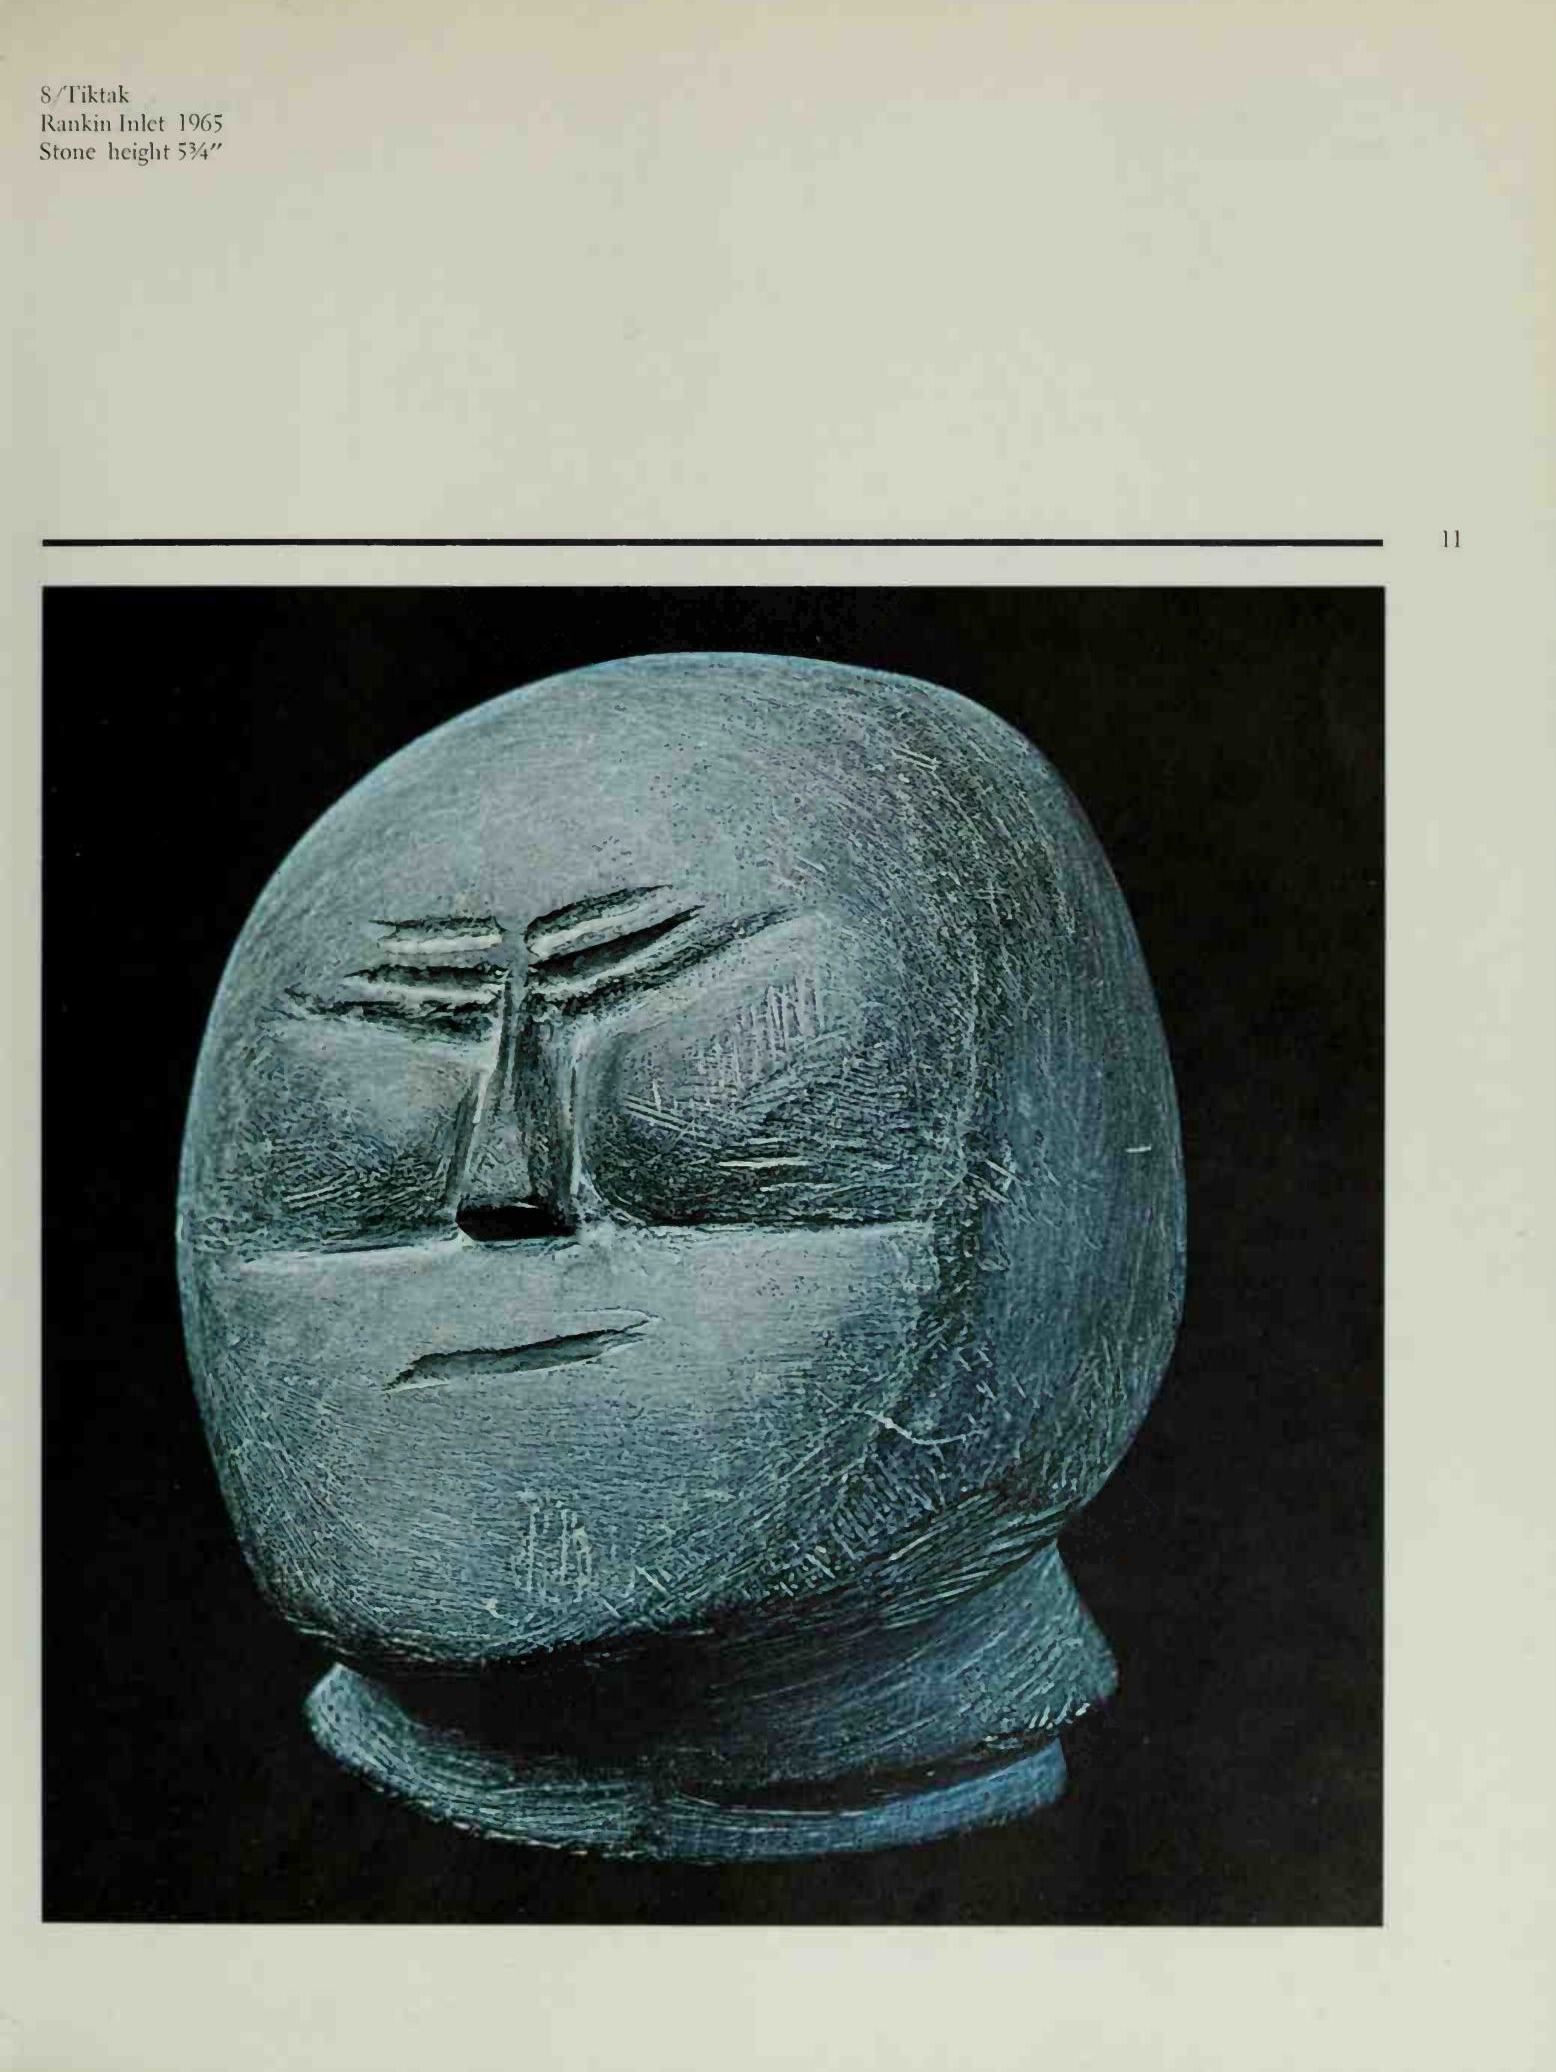 Sculpture of the Escimo / George Swinton. — Greenwich, Connecticut : New York Graphic Society, 1972